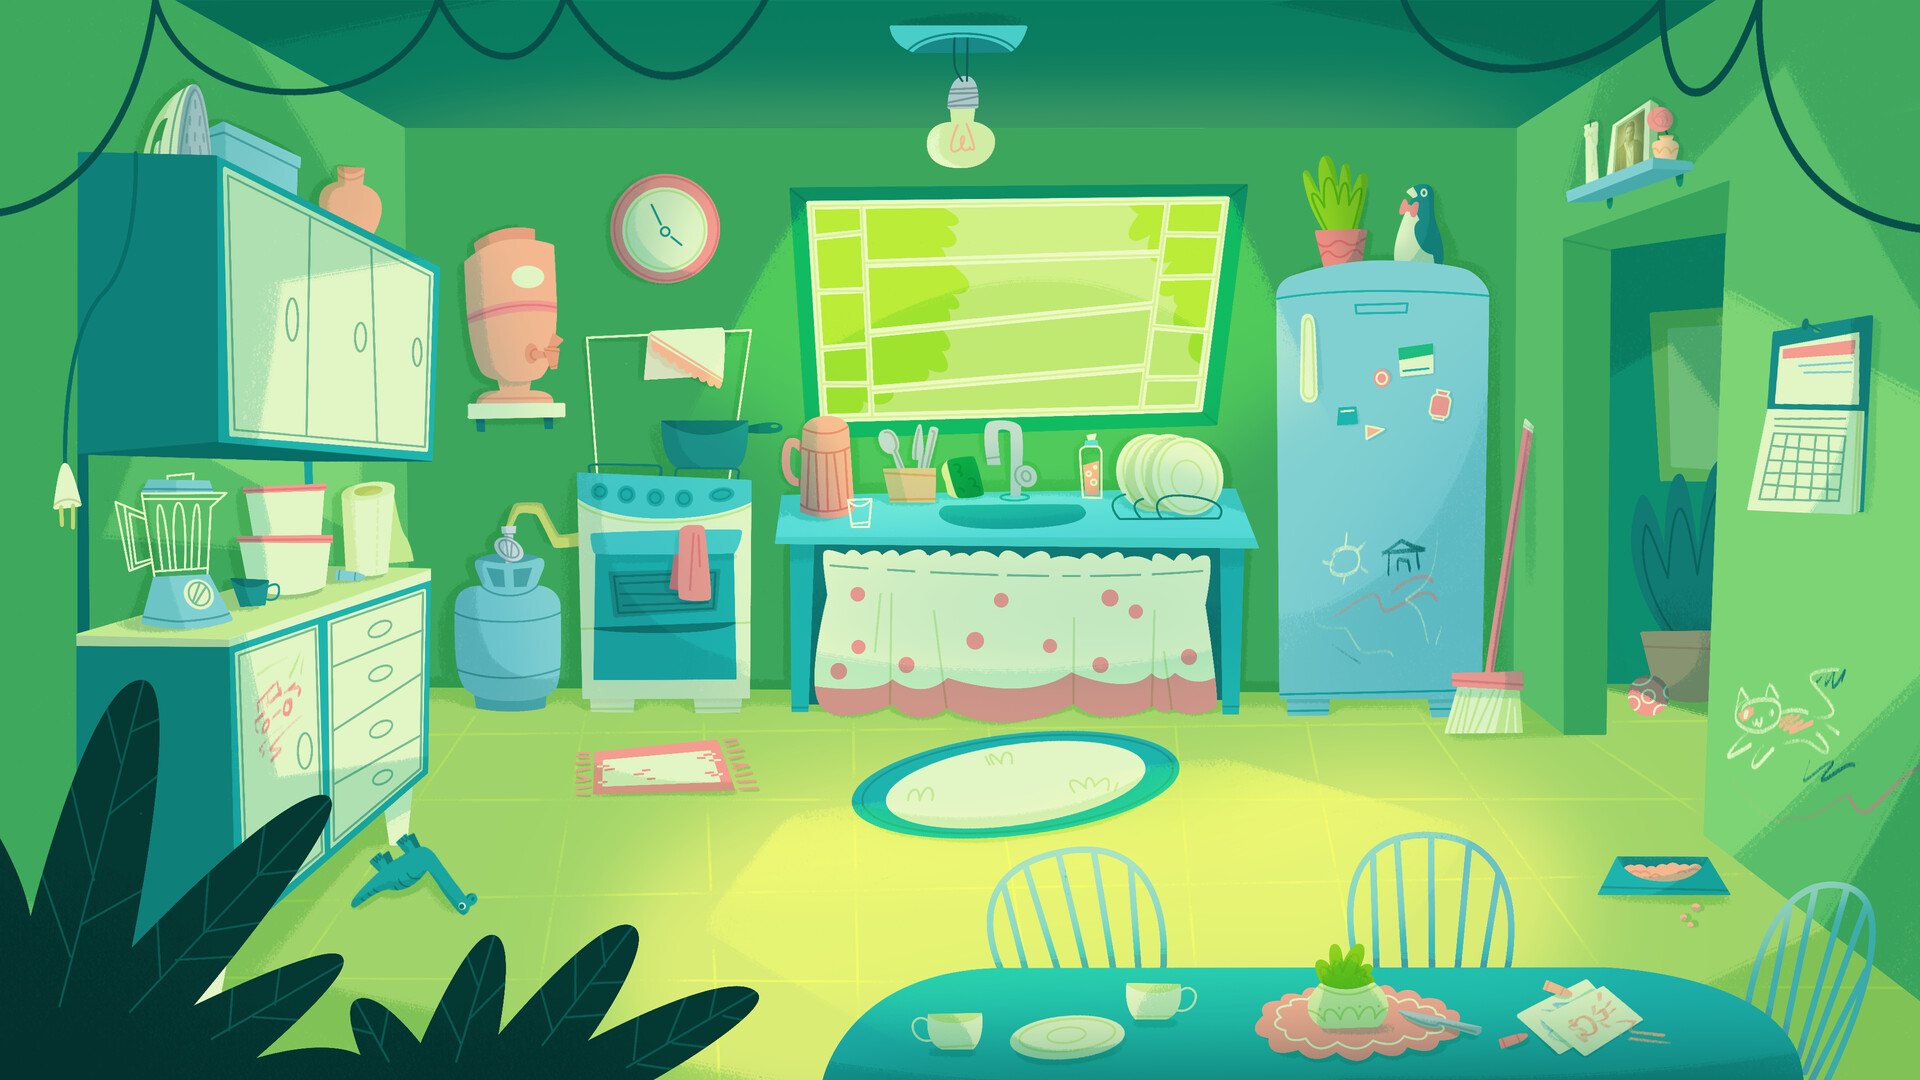 ArtStation - Green Kitchen - Animation Background